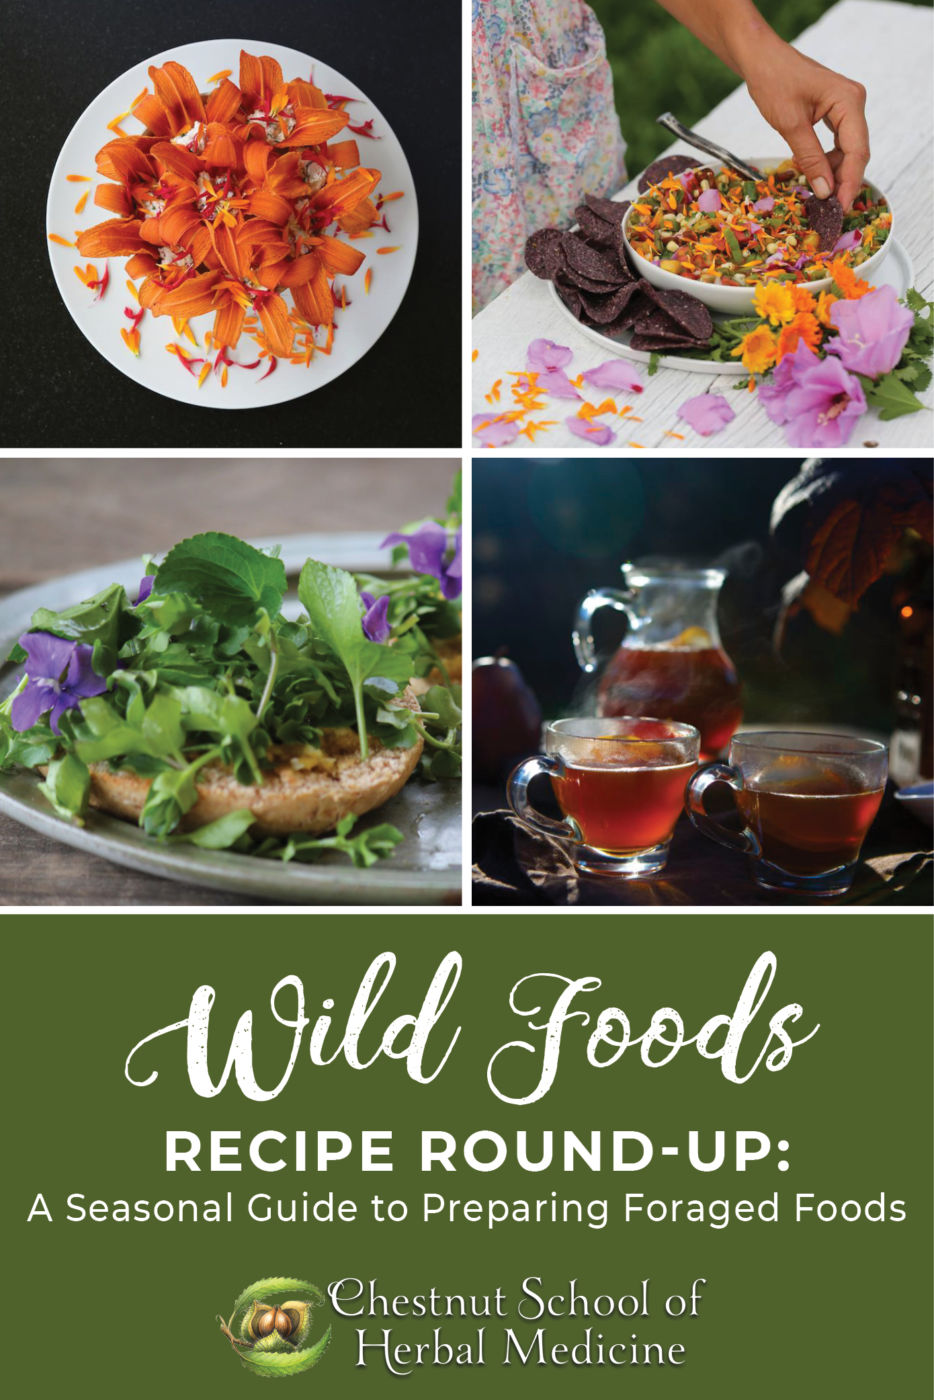 Wild Foods Recipe Round-Up